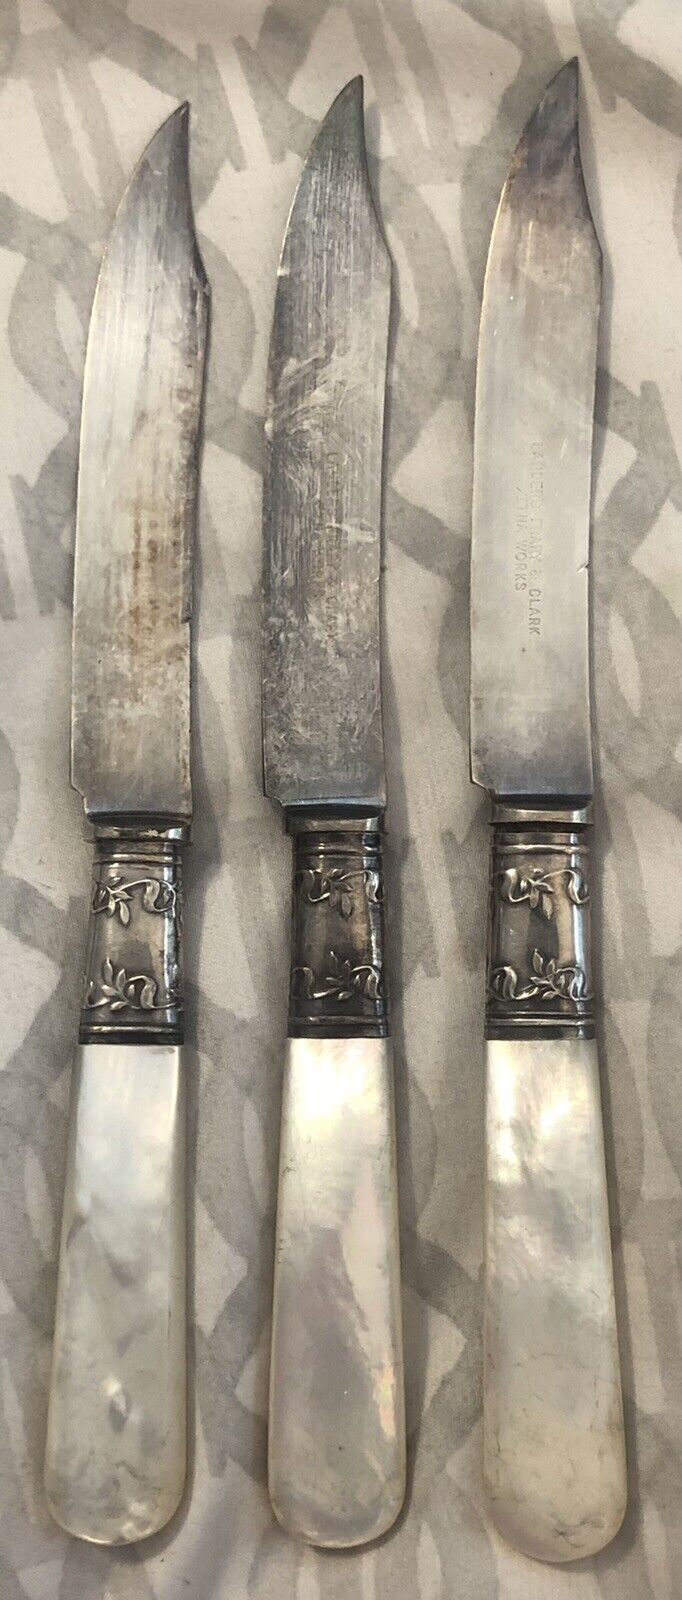 Vintage Set of 3 Landers, Frary & Clark Fruit Knives Mother of Pearl Handles